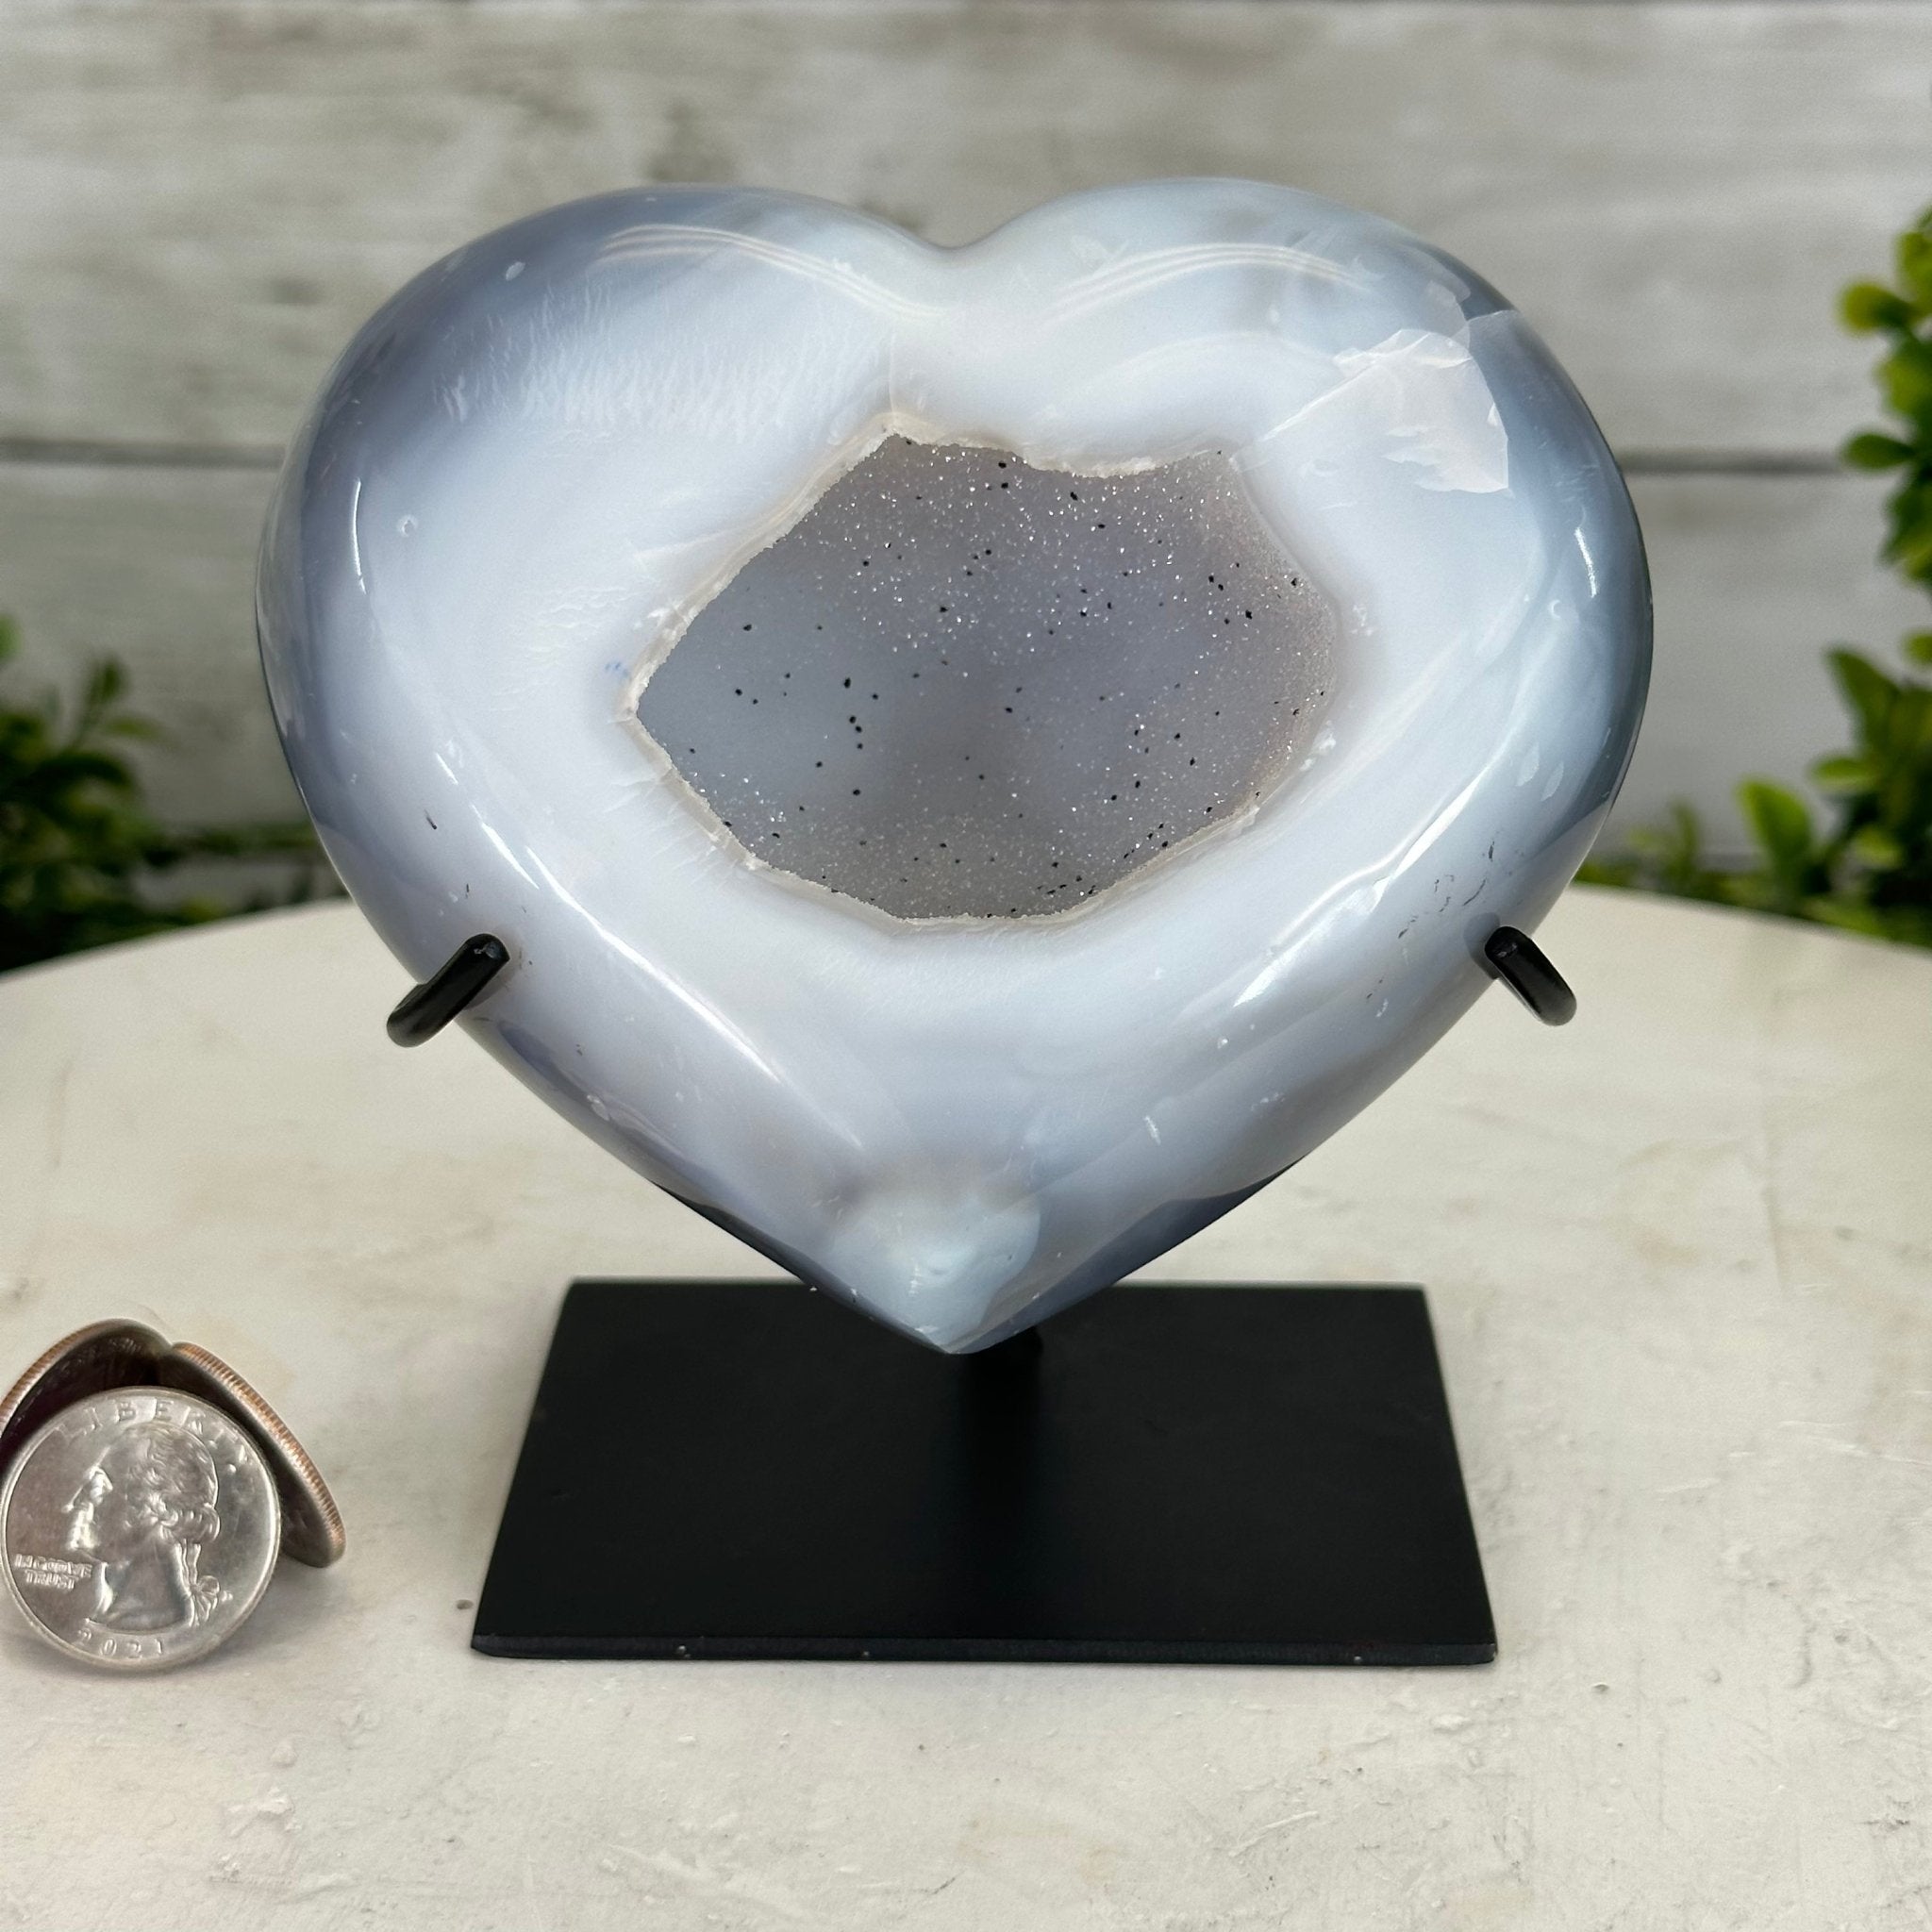 Polished Agate Heart Geode on a Metal Stand, 2.1 lbs & 5" Tall, Model #5468-0041 by Brazil Gems - Brazil GemsBrazil GemsPolished Agate Heart Geode on a Metal Stand, 2.1 lbs & 5" Tall, Model #5468-0041 by Brazil GemsHearts5468-0041